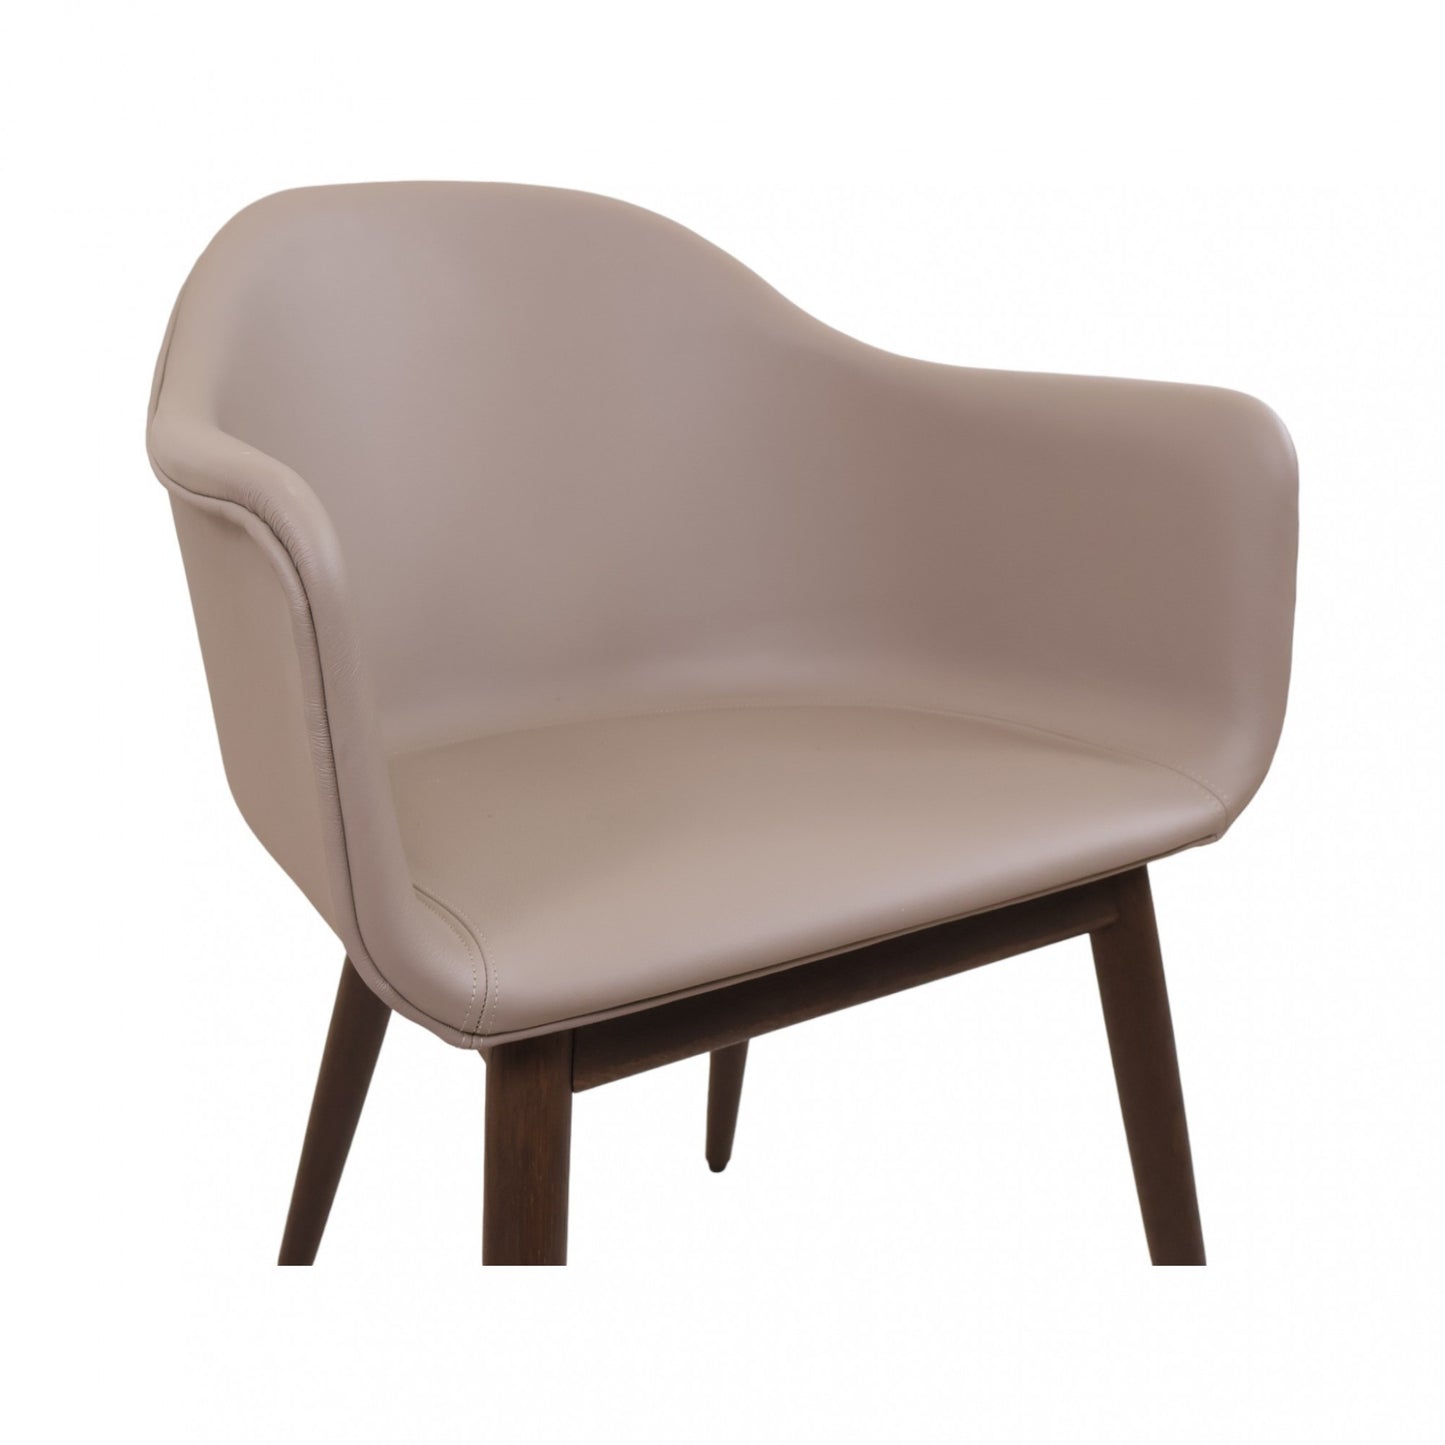 Rengjort | MENU Harbour Dining Chair, Wooden Base, upholstered